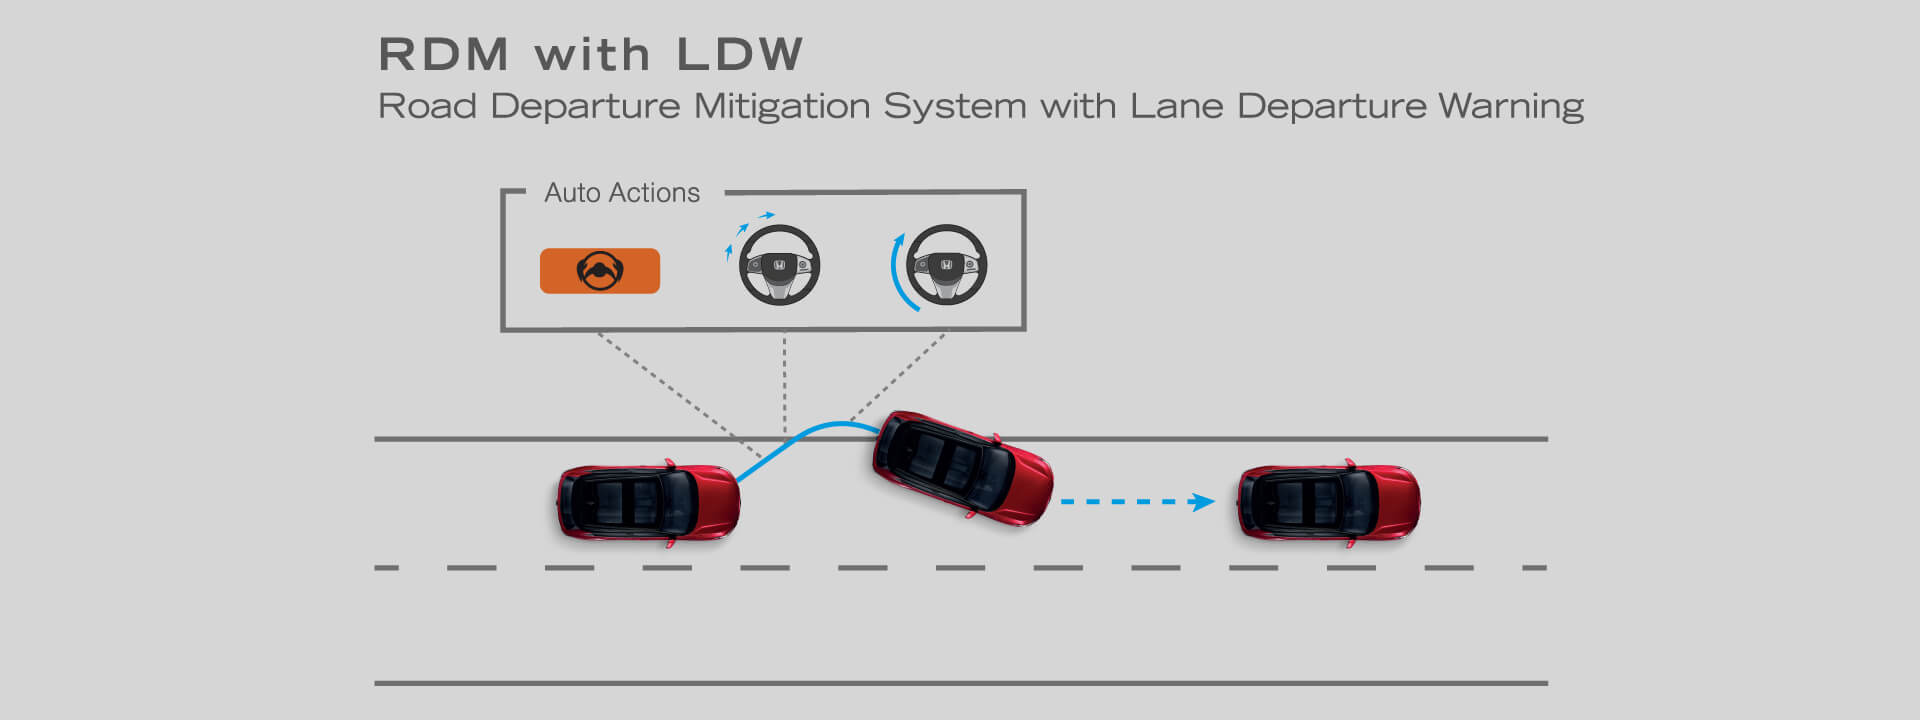 Road Departure Mitigation System with Lane Departure Warning (RDM with LDW) ระบบเตือนและช่วยควบคุมเมื่อรถออกนอกช่องทางเดินรถ